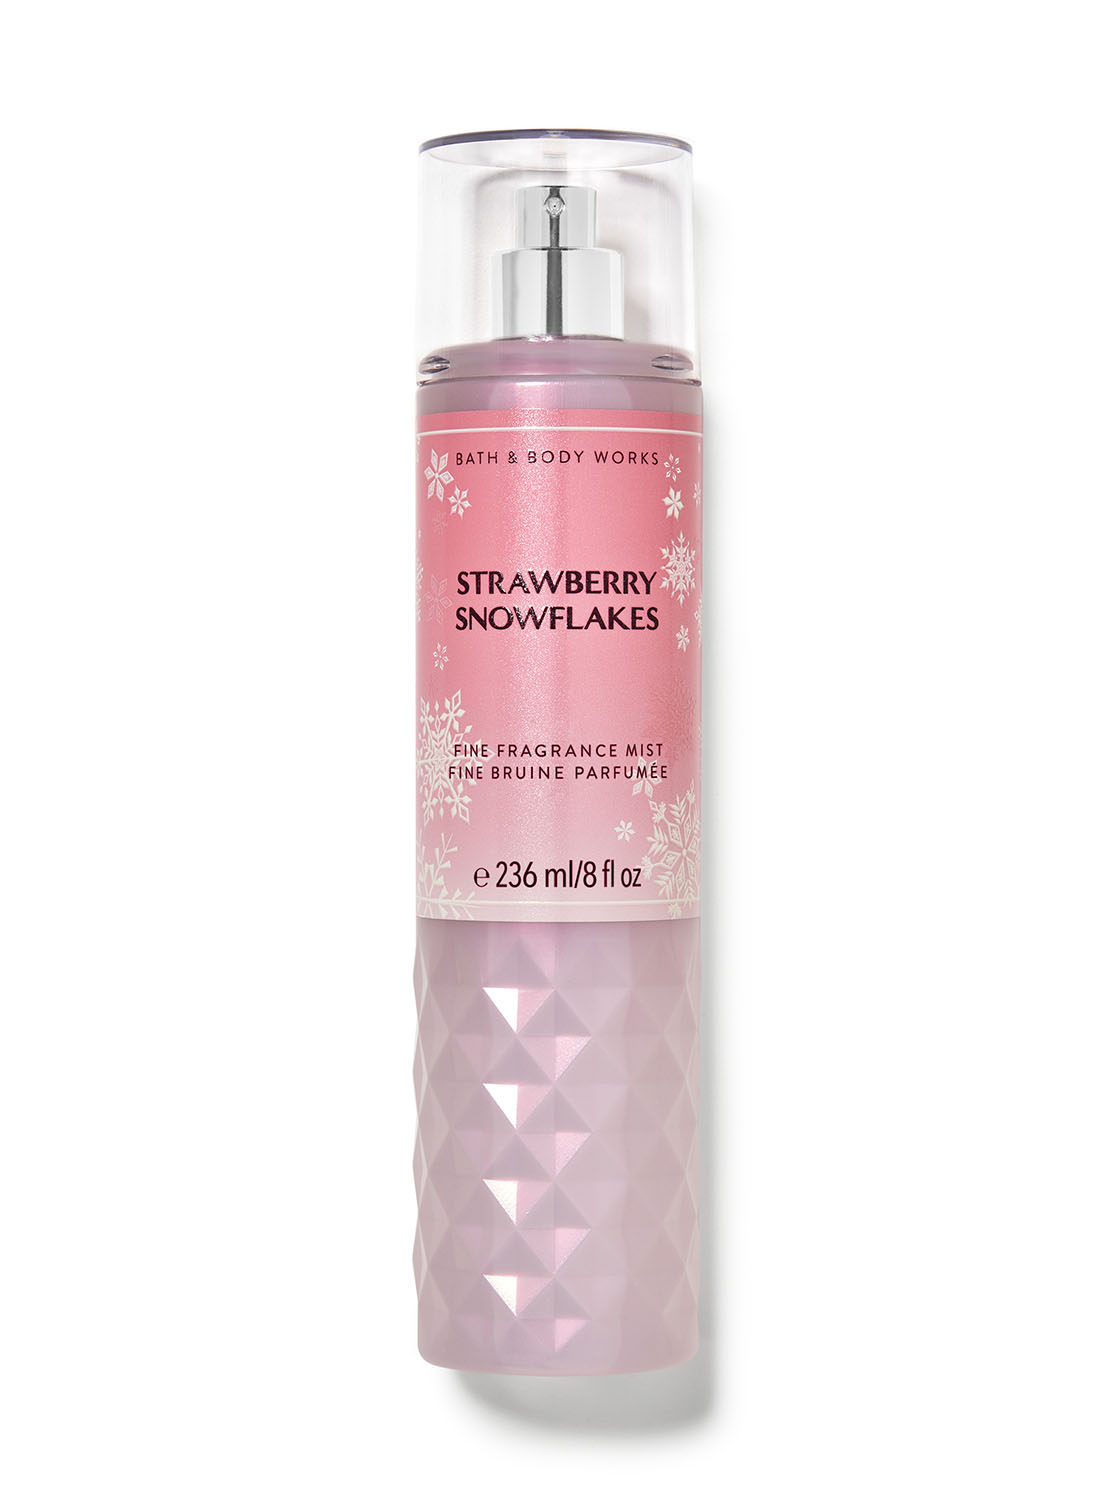 strawberry-snowflakes-fine-fragrance-mist-bath-and-body-works